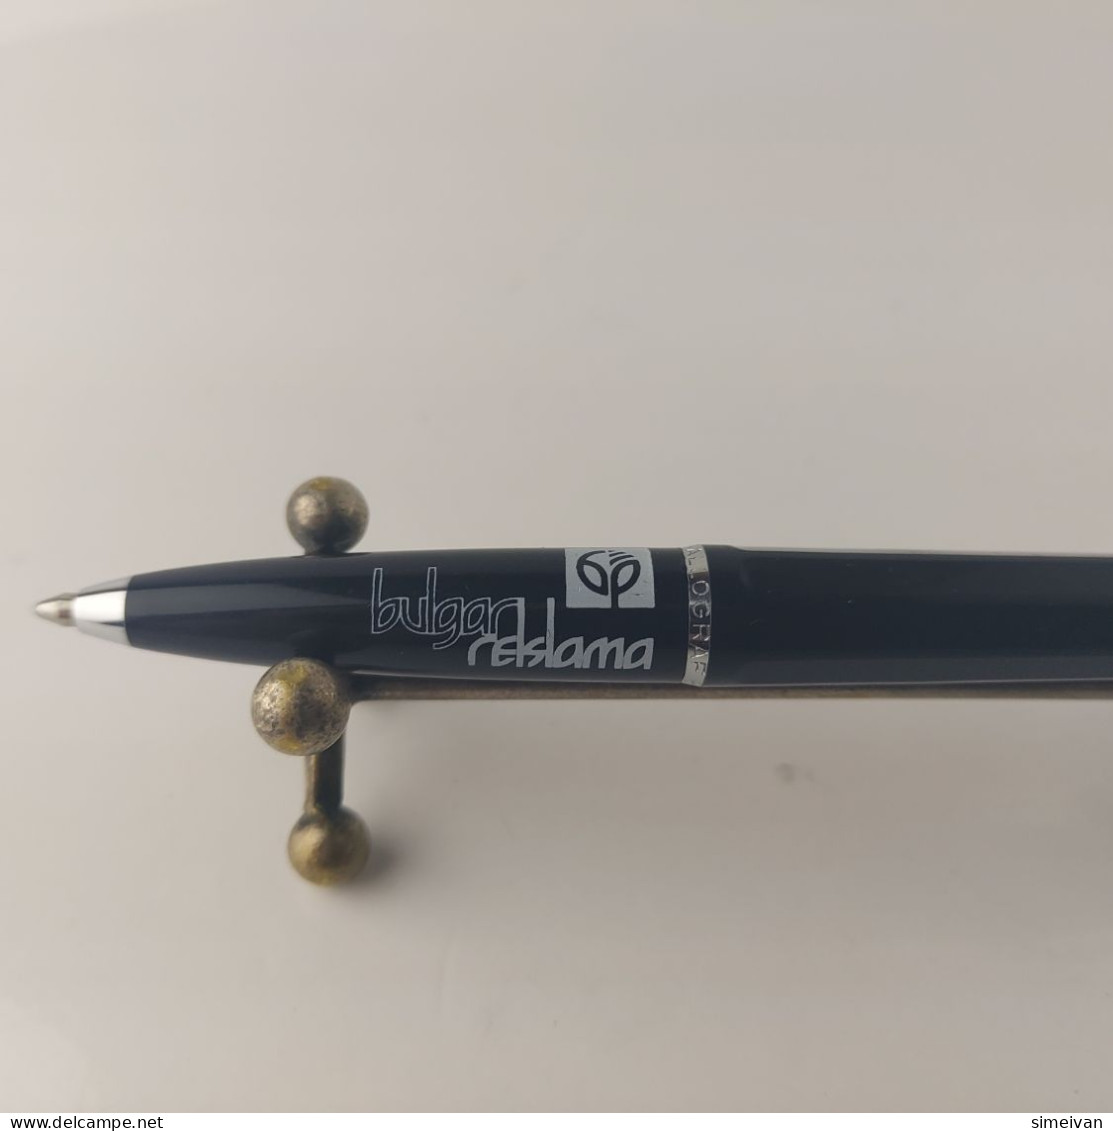 Vintage Ballograf Epoca Ballpoint Pen Black Chrome Trim Made In Sweden #5525 - Pens